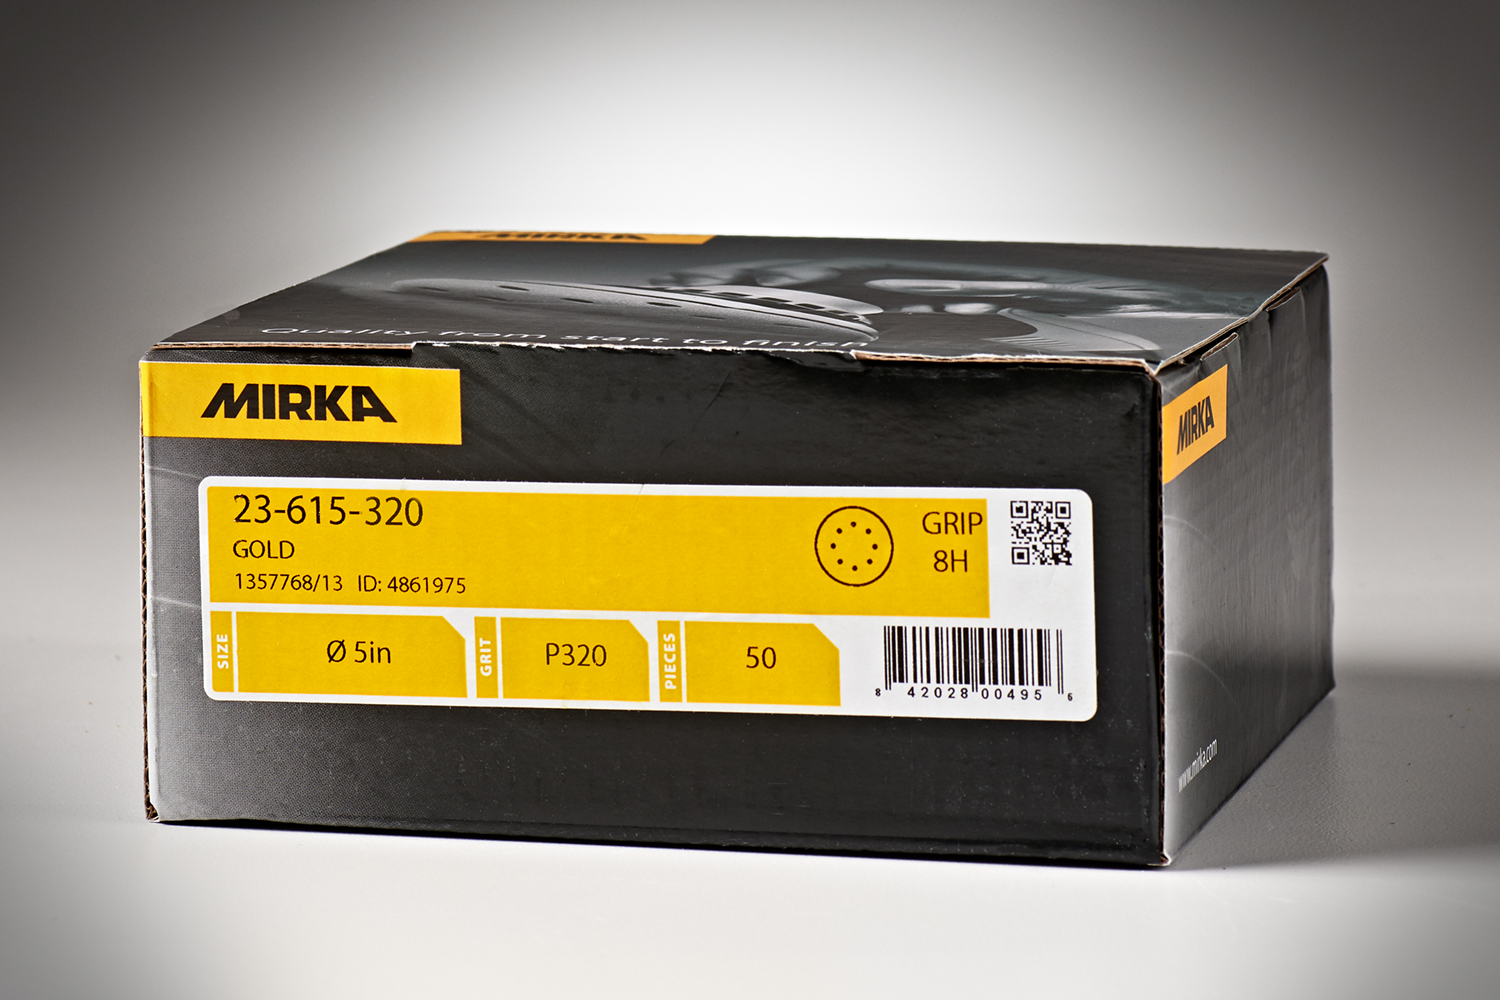 Qty 50 per Bx Q.Silver 5" Grip Disc 500g Details about   Mirka 2B-612-500 